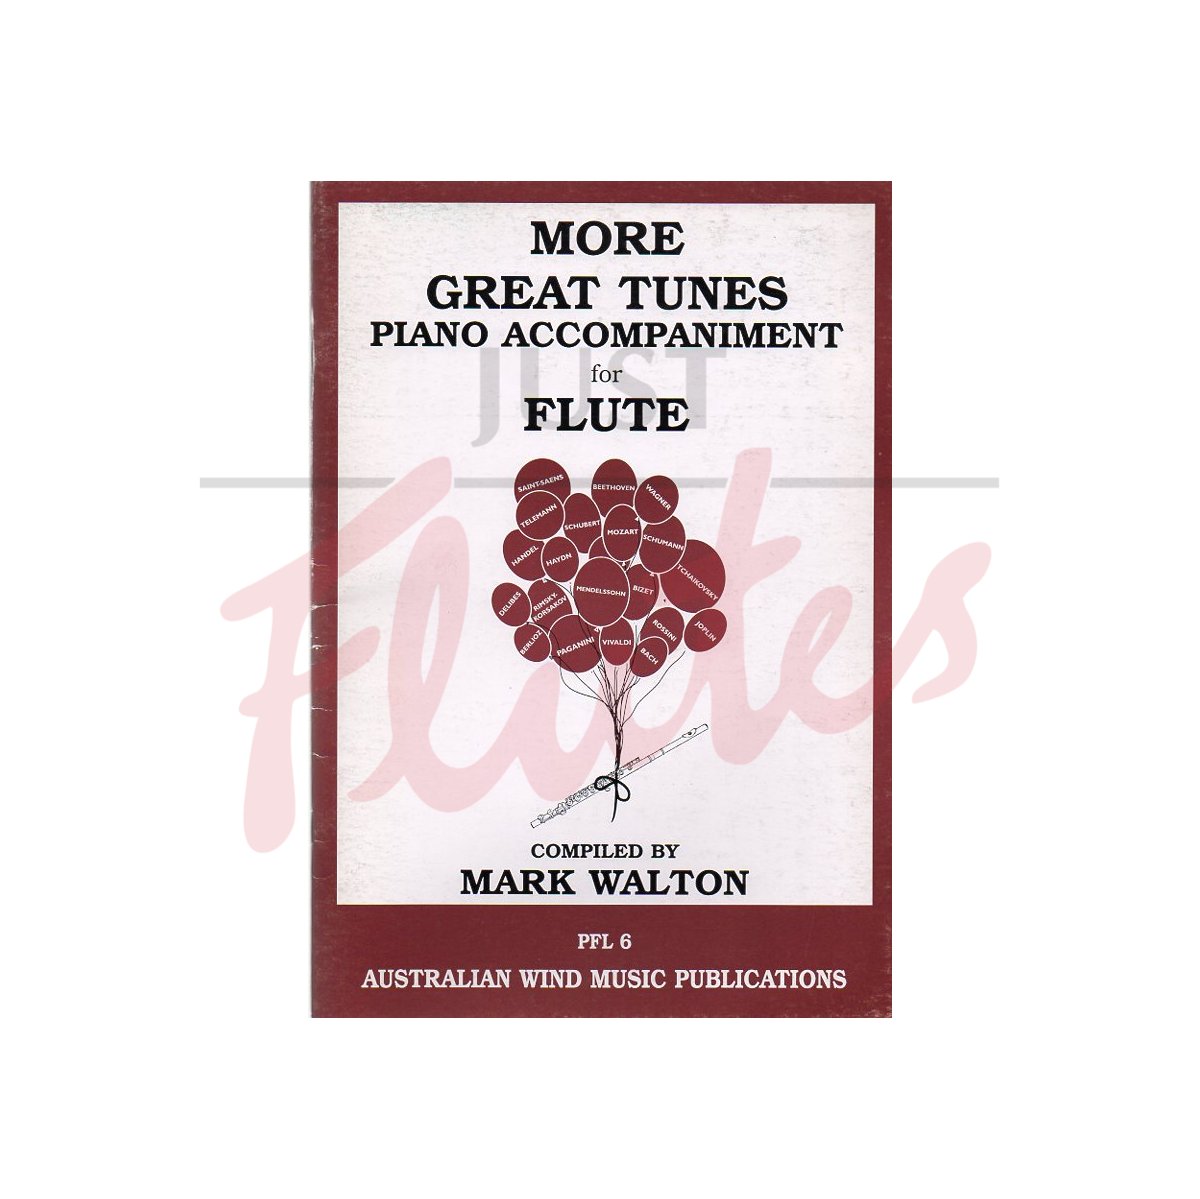 More Great Tunes for Flute [Piano Accompaniment Book]